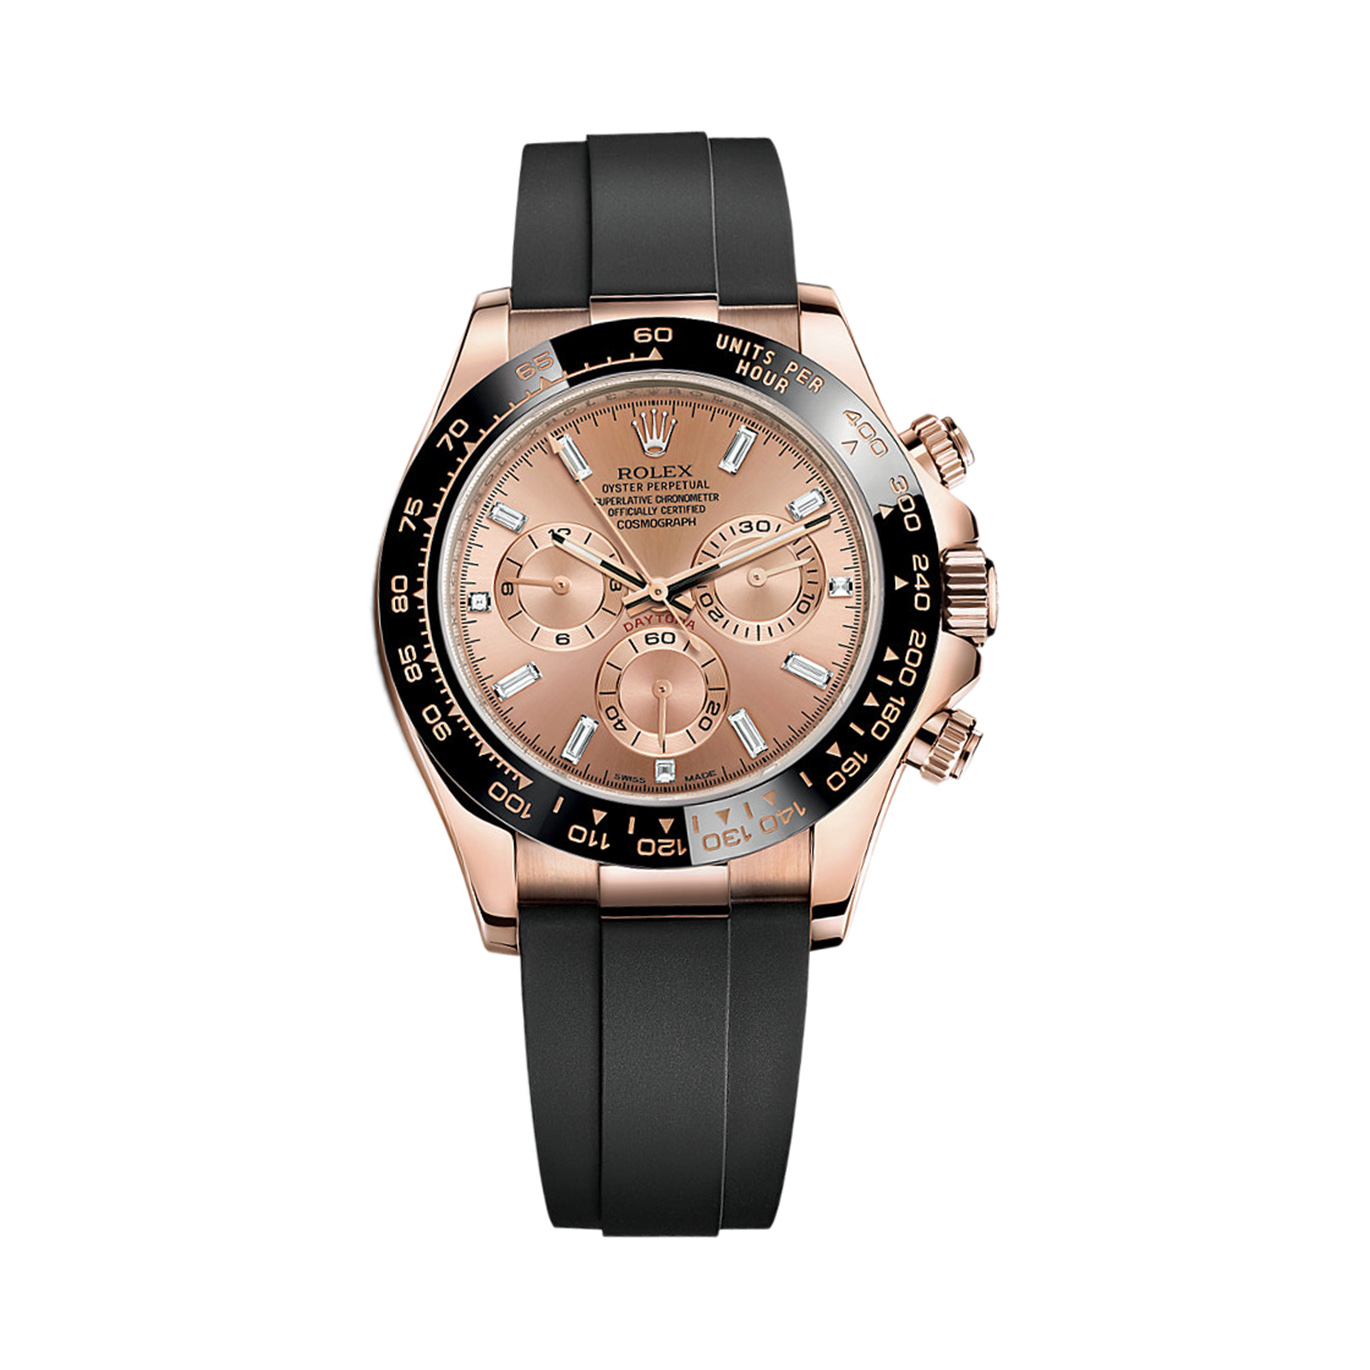 Cosmograph Daytona 116515LN Rose Gold Watch (Pink)